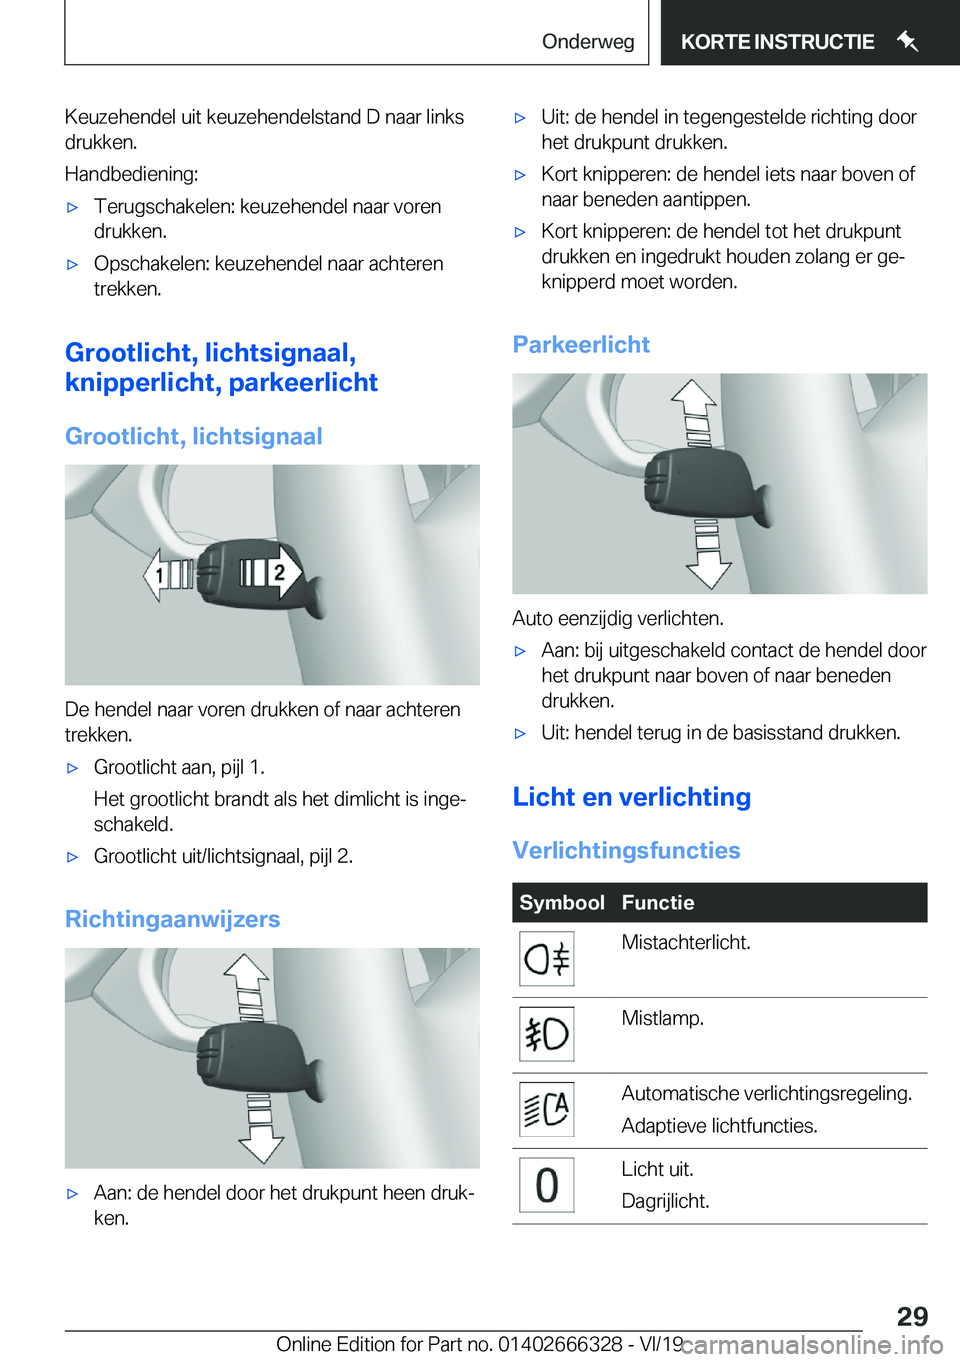 BMW 4 SERIES COUPE 2020  Instructieboekjes (in Dutch) �K�e�u�z�e�h�e�n�d�e�l��u�i�t��k�e�u�z�e�h�e�n�d�e�l�s�t�a�n�d��D��n�a�a�r��l�i�n�k�s
�d�r�u�k�k�e�n�.
�H�a�n�d�b�e�d�i�e�n�i�n�g�:'x�T�e�r�u�g�s�c�h�a�k�e�l�e�n�:��k�e�u�z�e�h�e�n�d�e�l��n